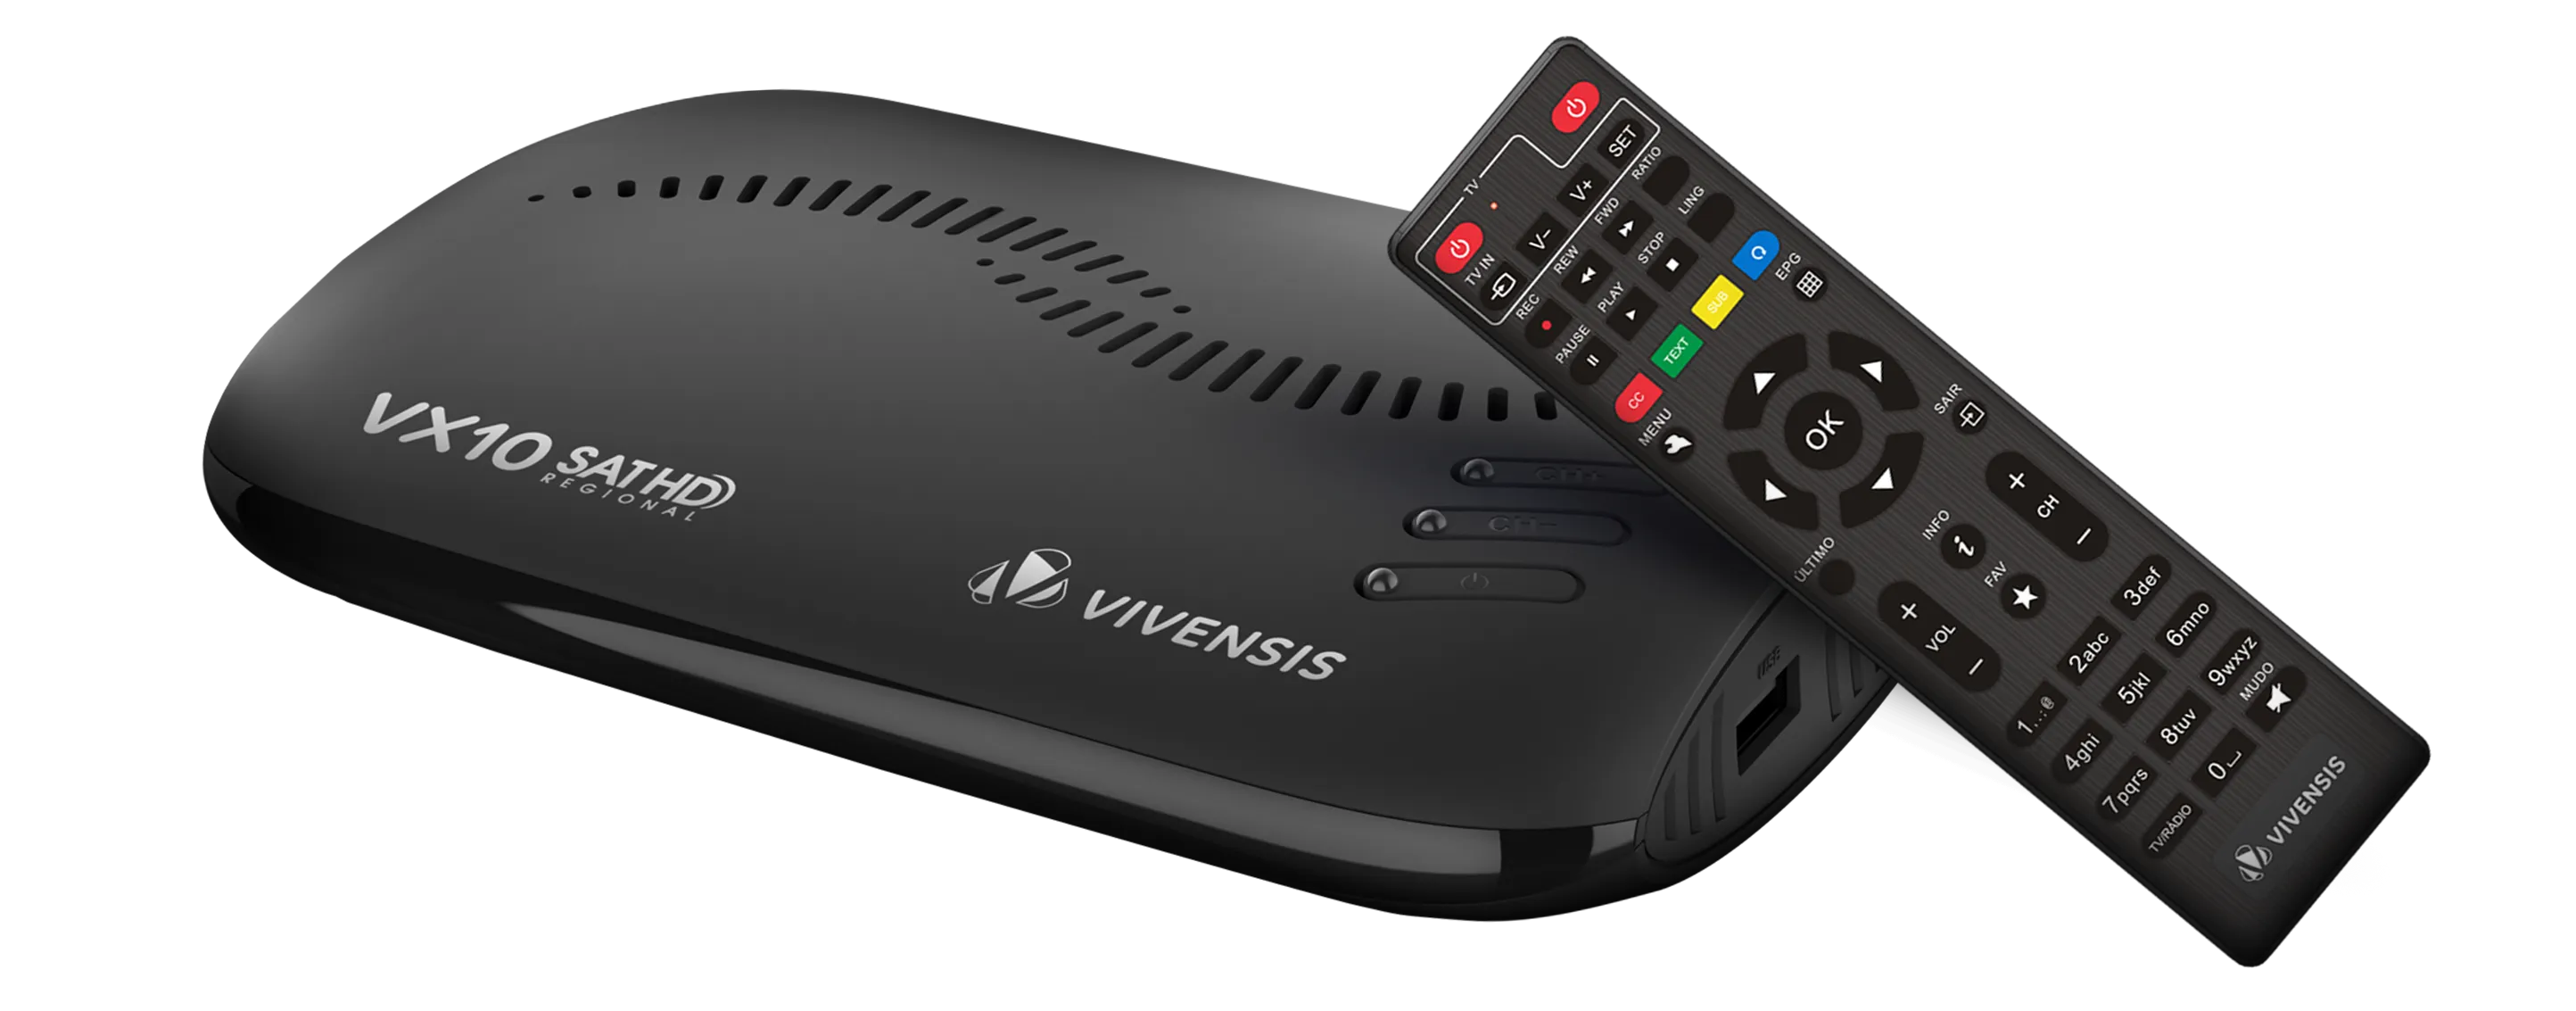 VIVENSIS TV SAT HD